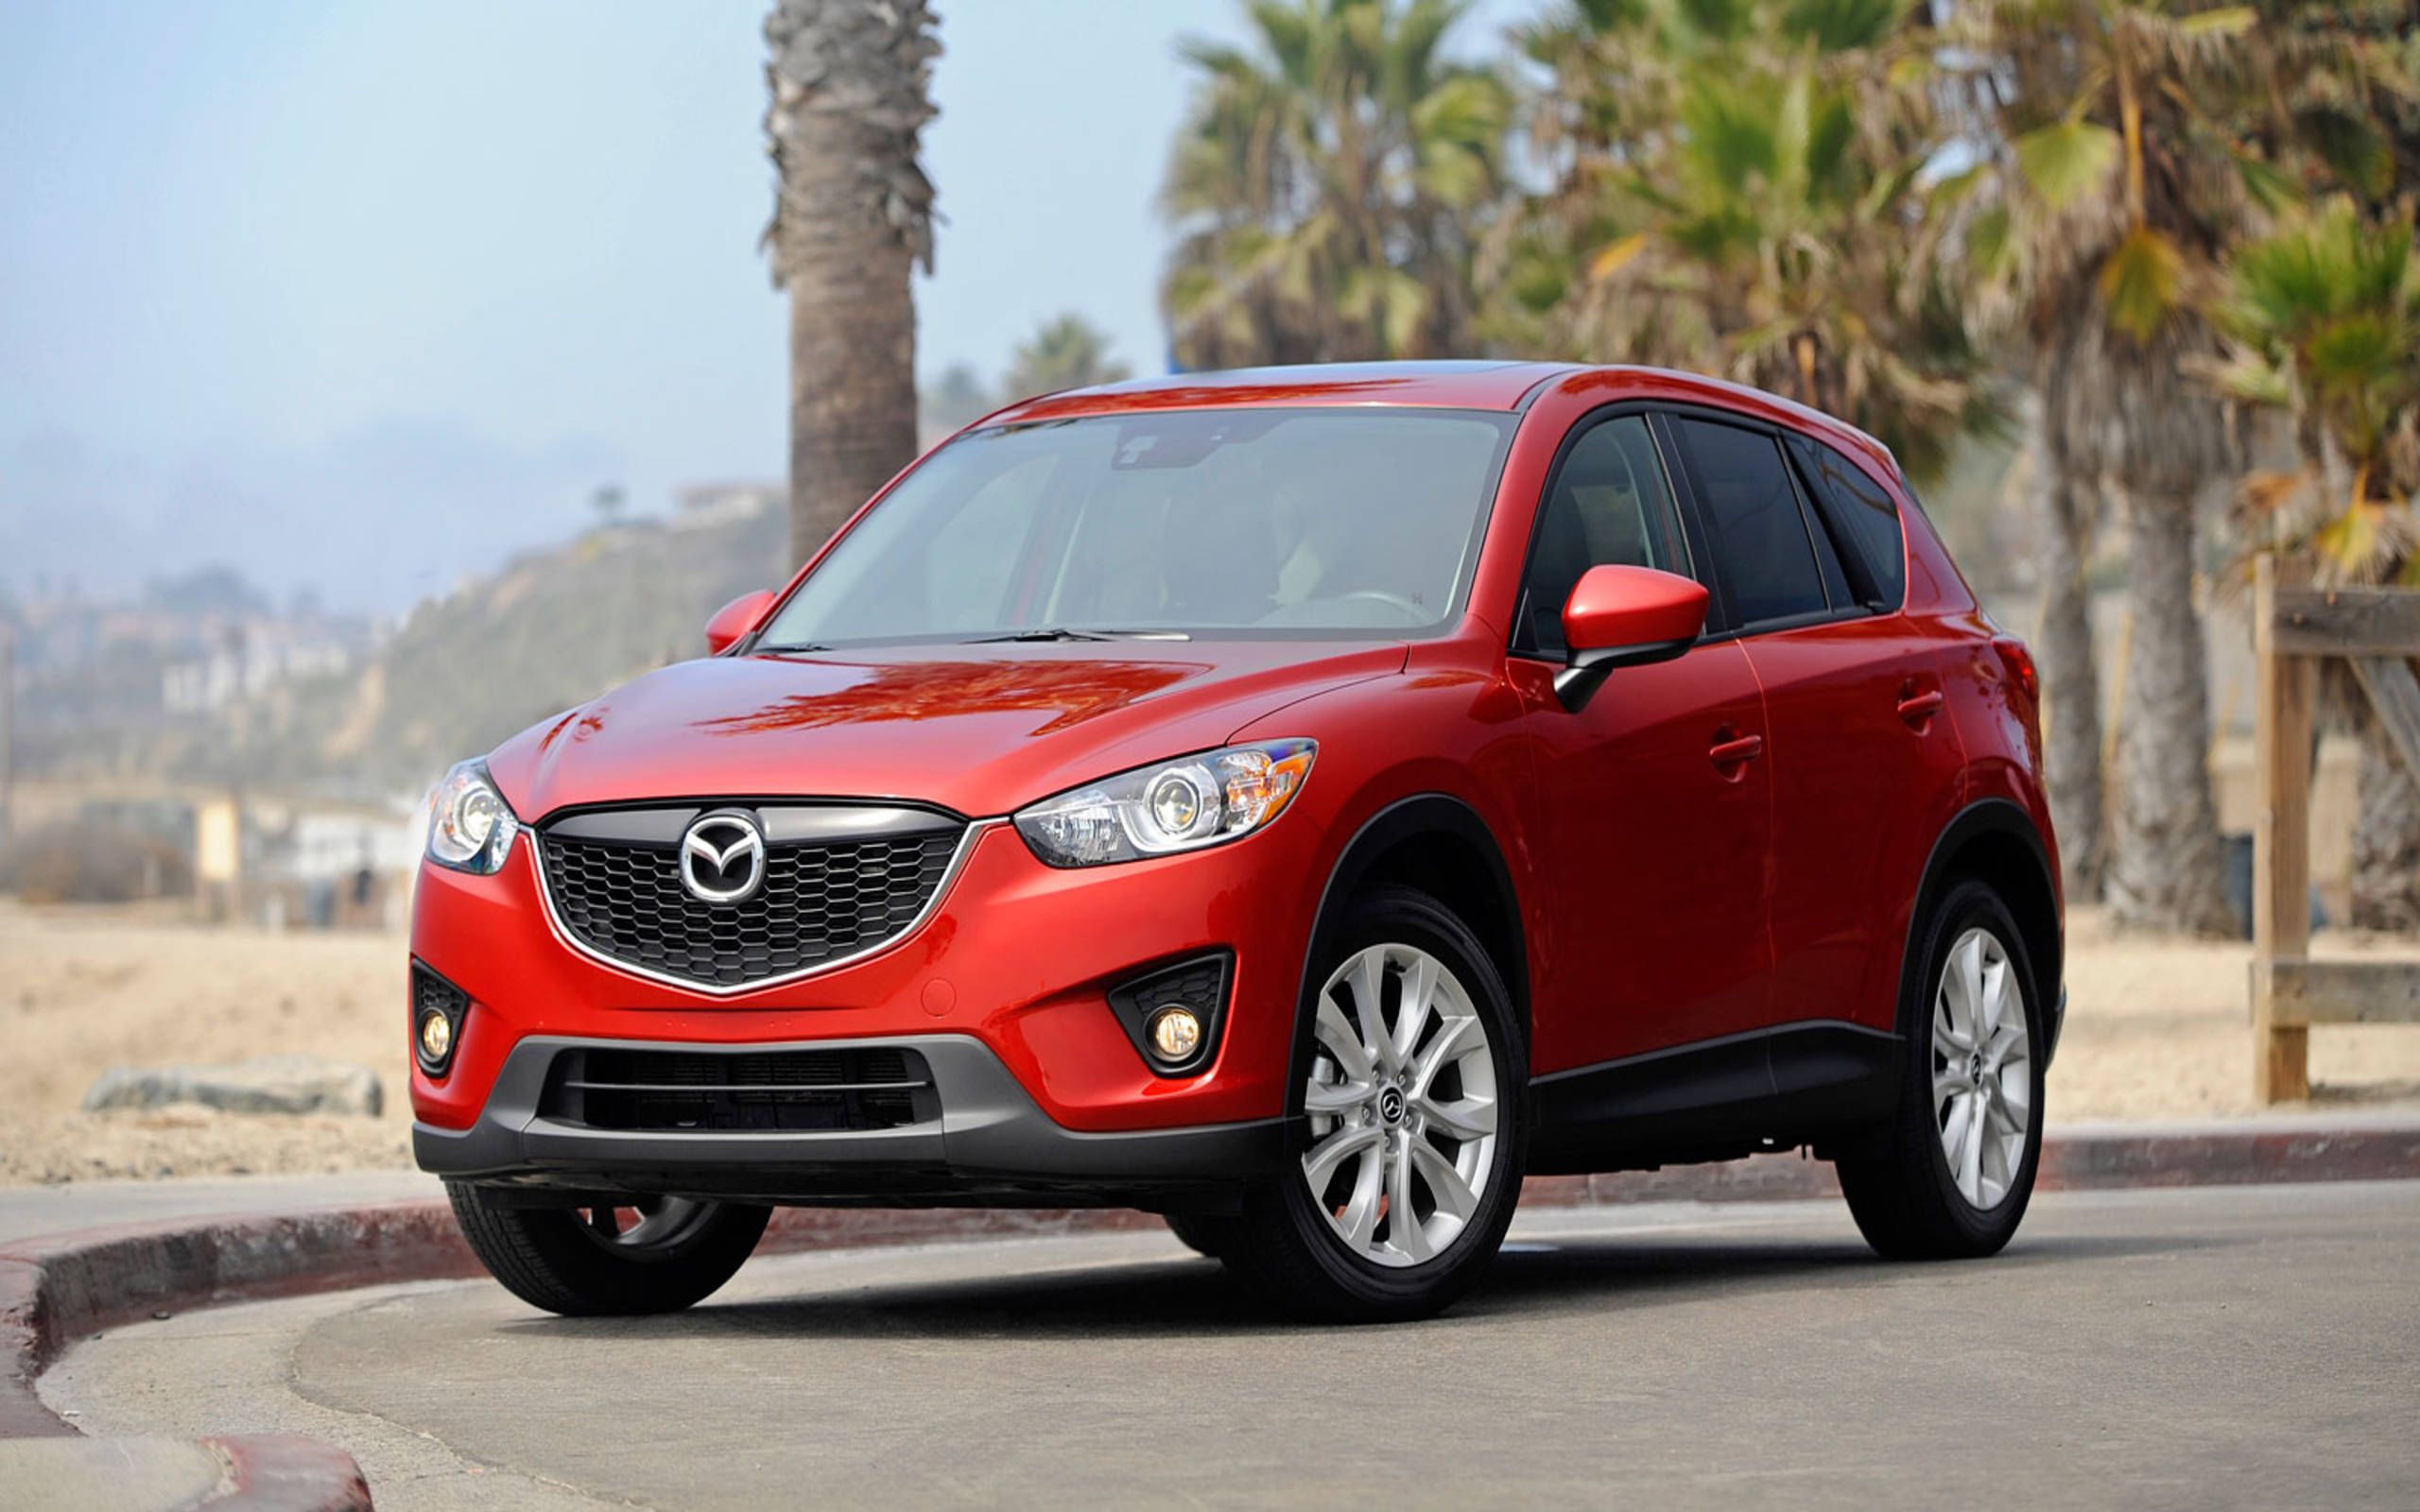 Mazda recalls SUVs due to risk of fuel filler pipe ruptures